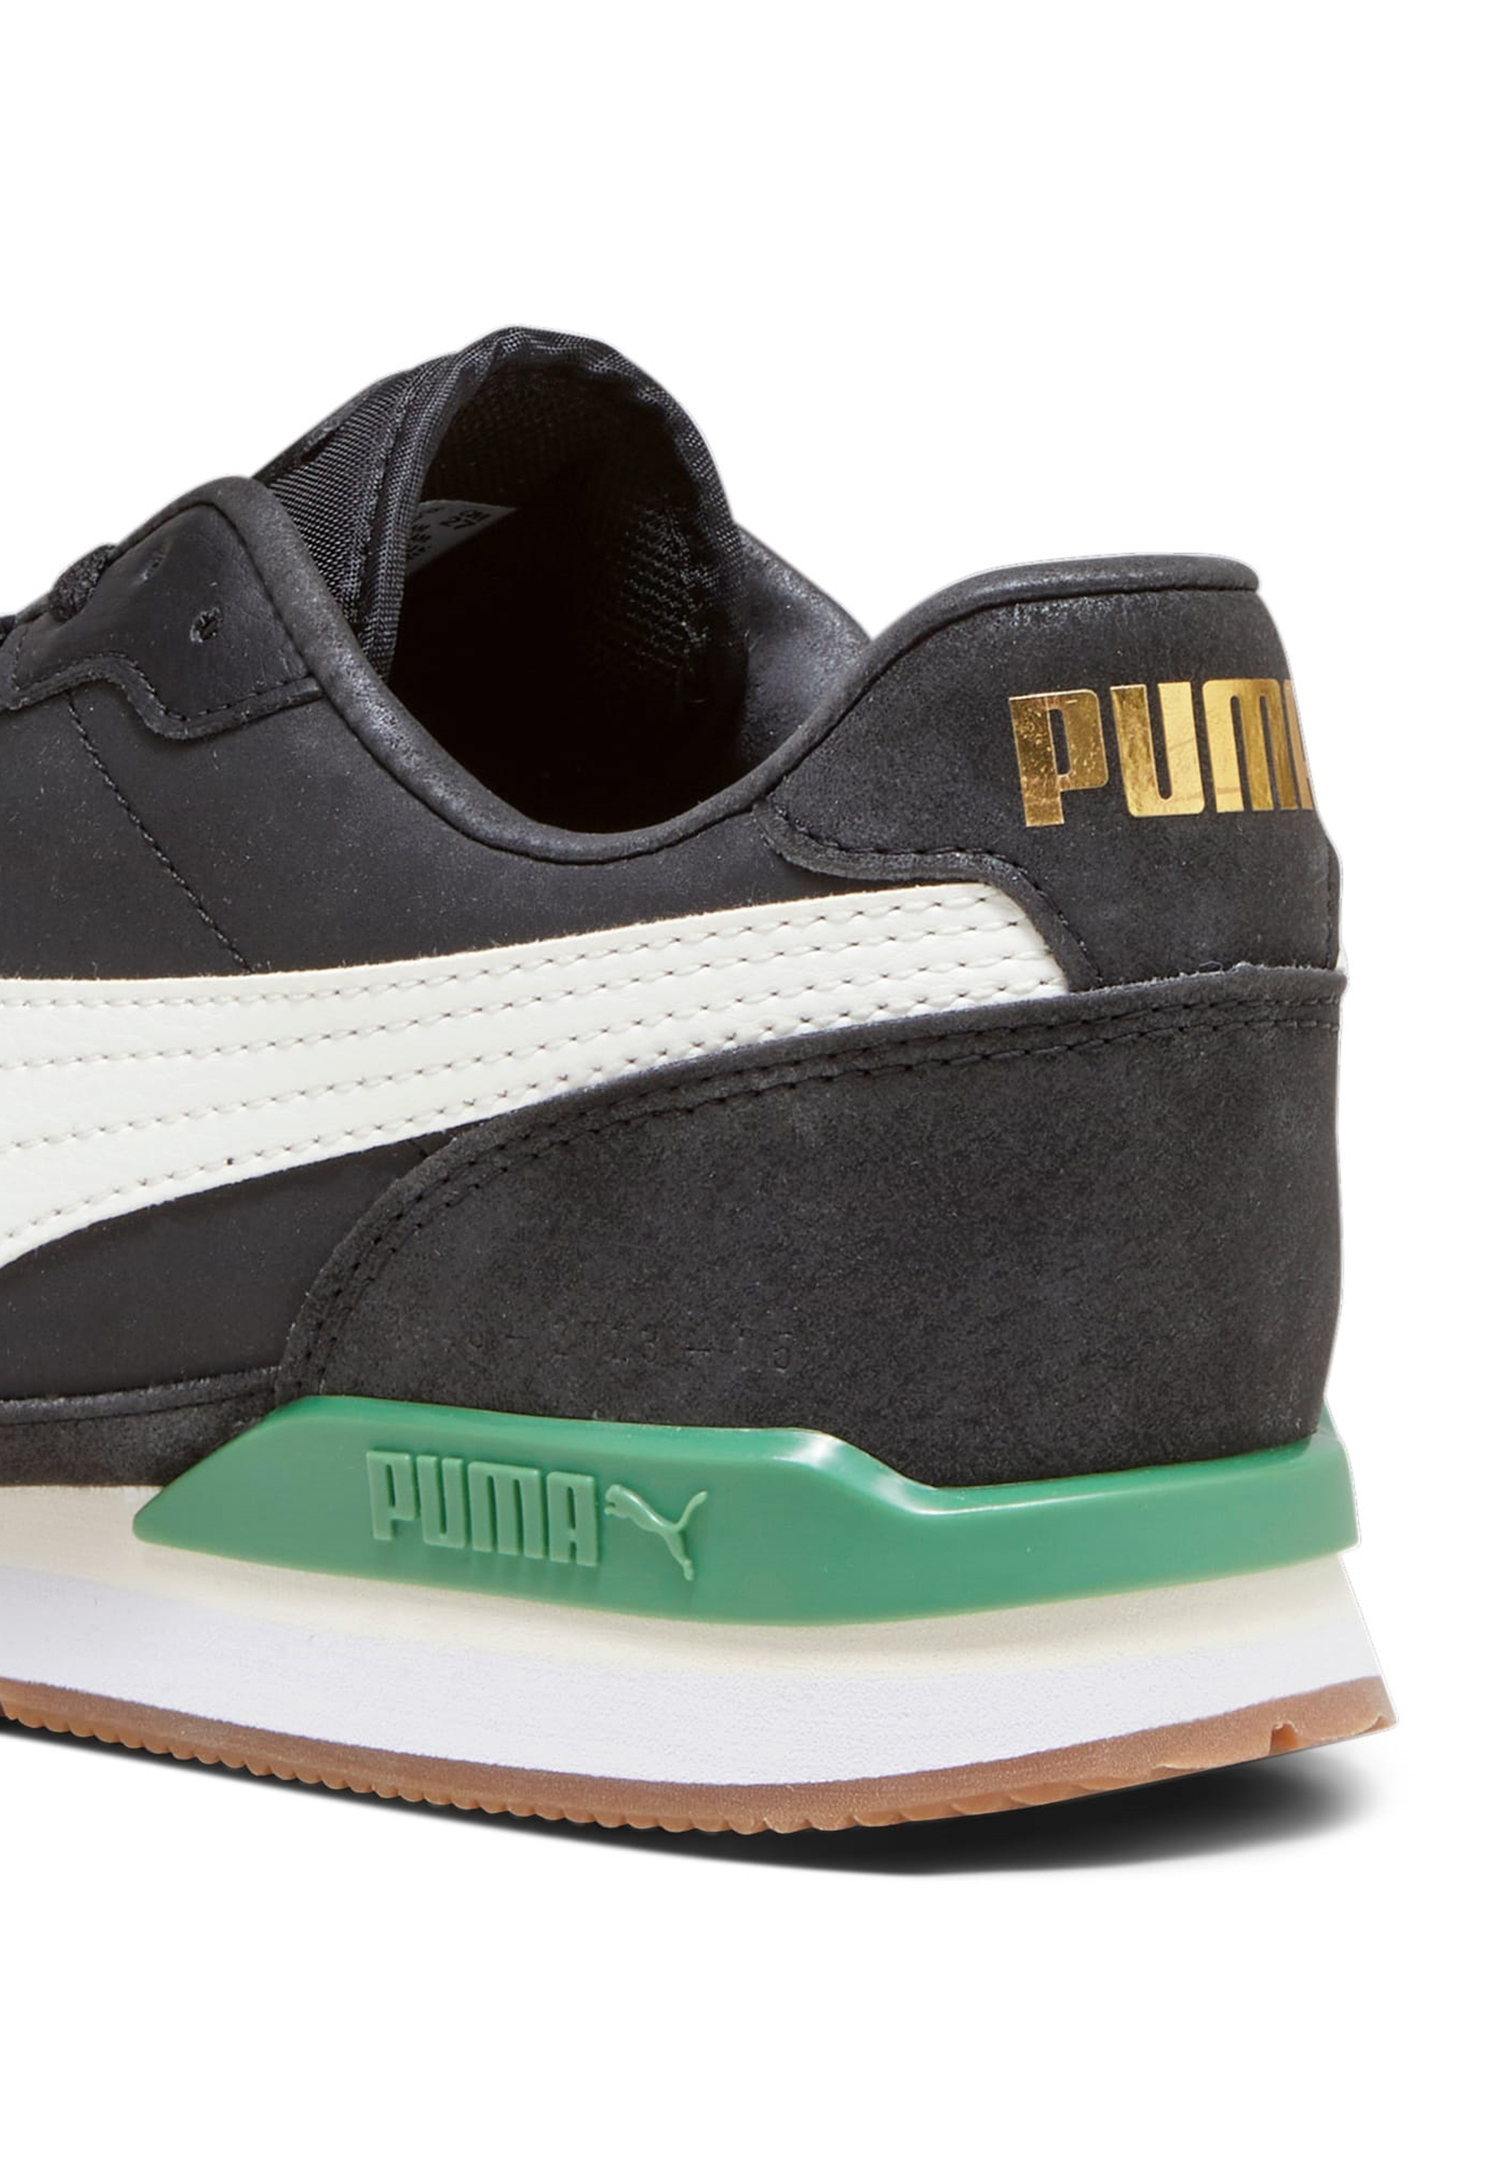 Puma ST Runner 75 Years Unisex Sneaker Turnschuhe 393889 02 schwarz